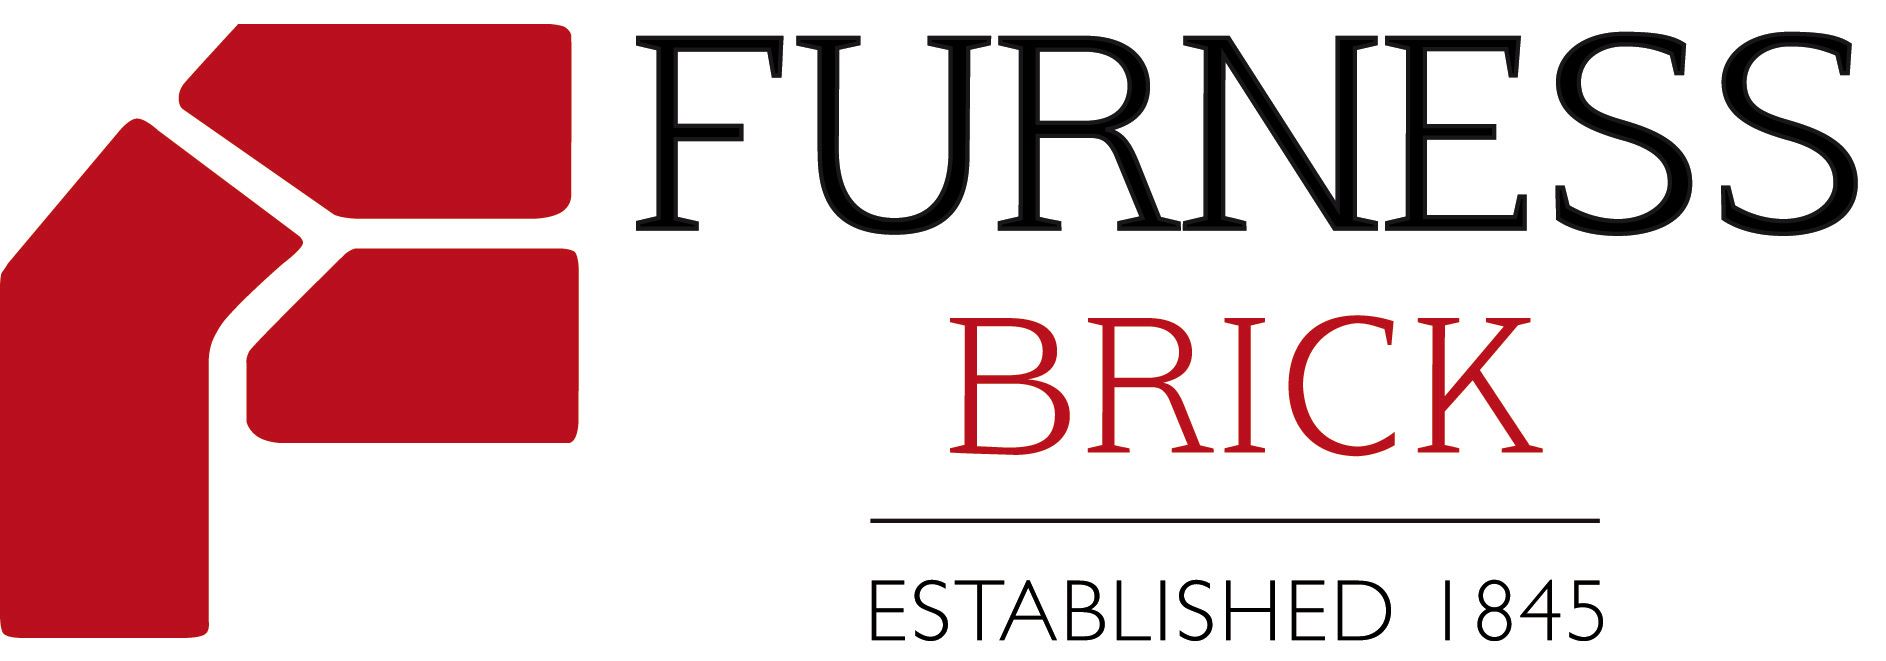 Furness Brick & Tile Company Ltd